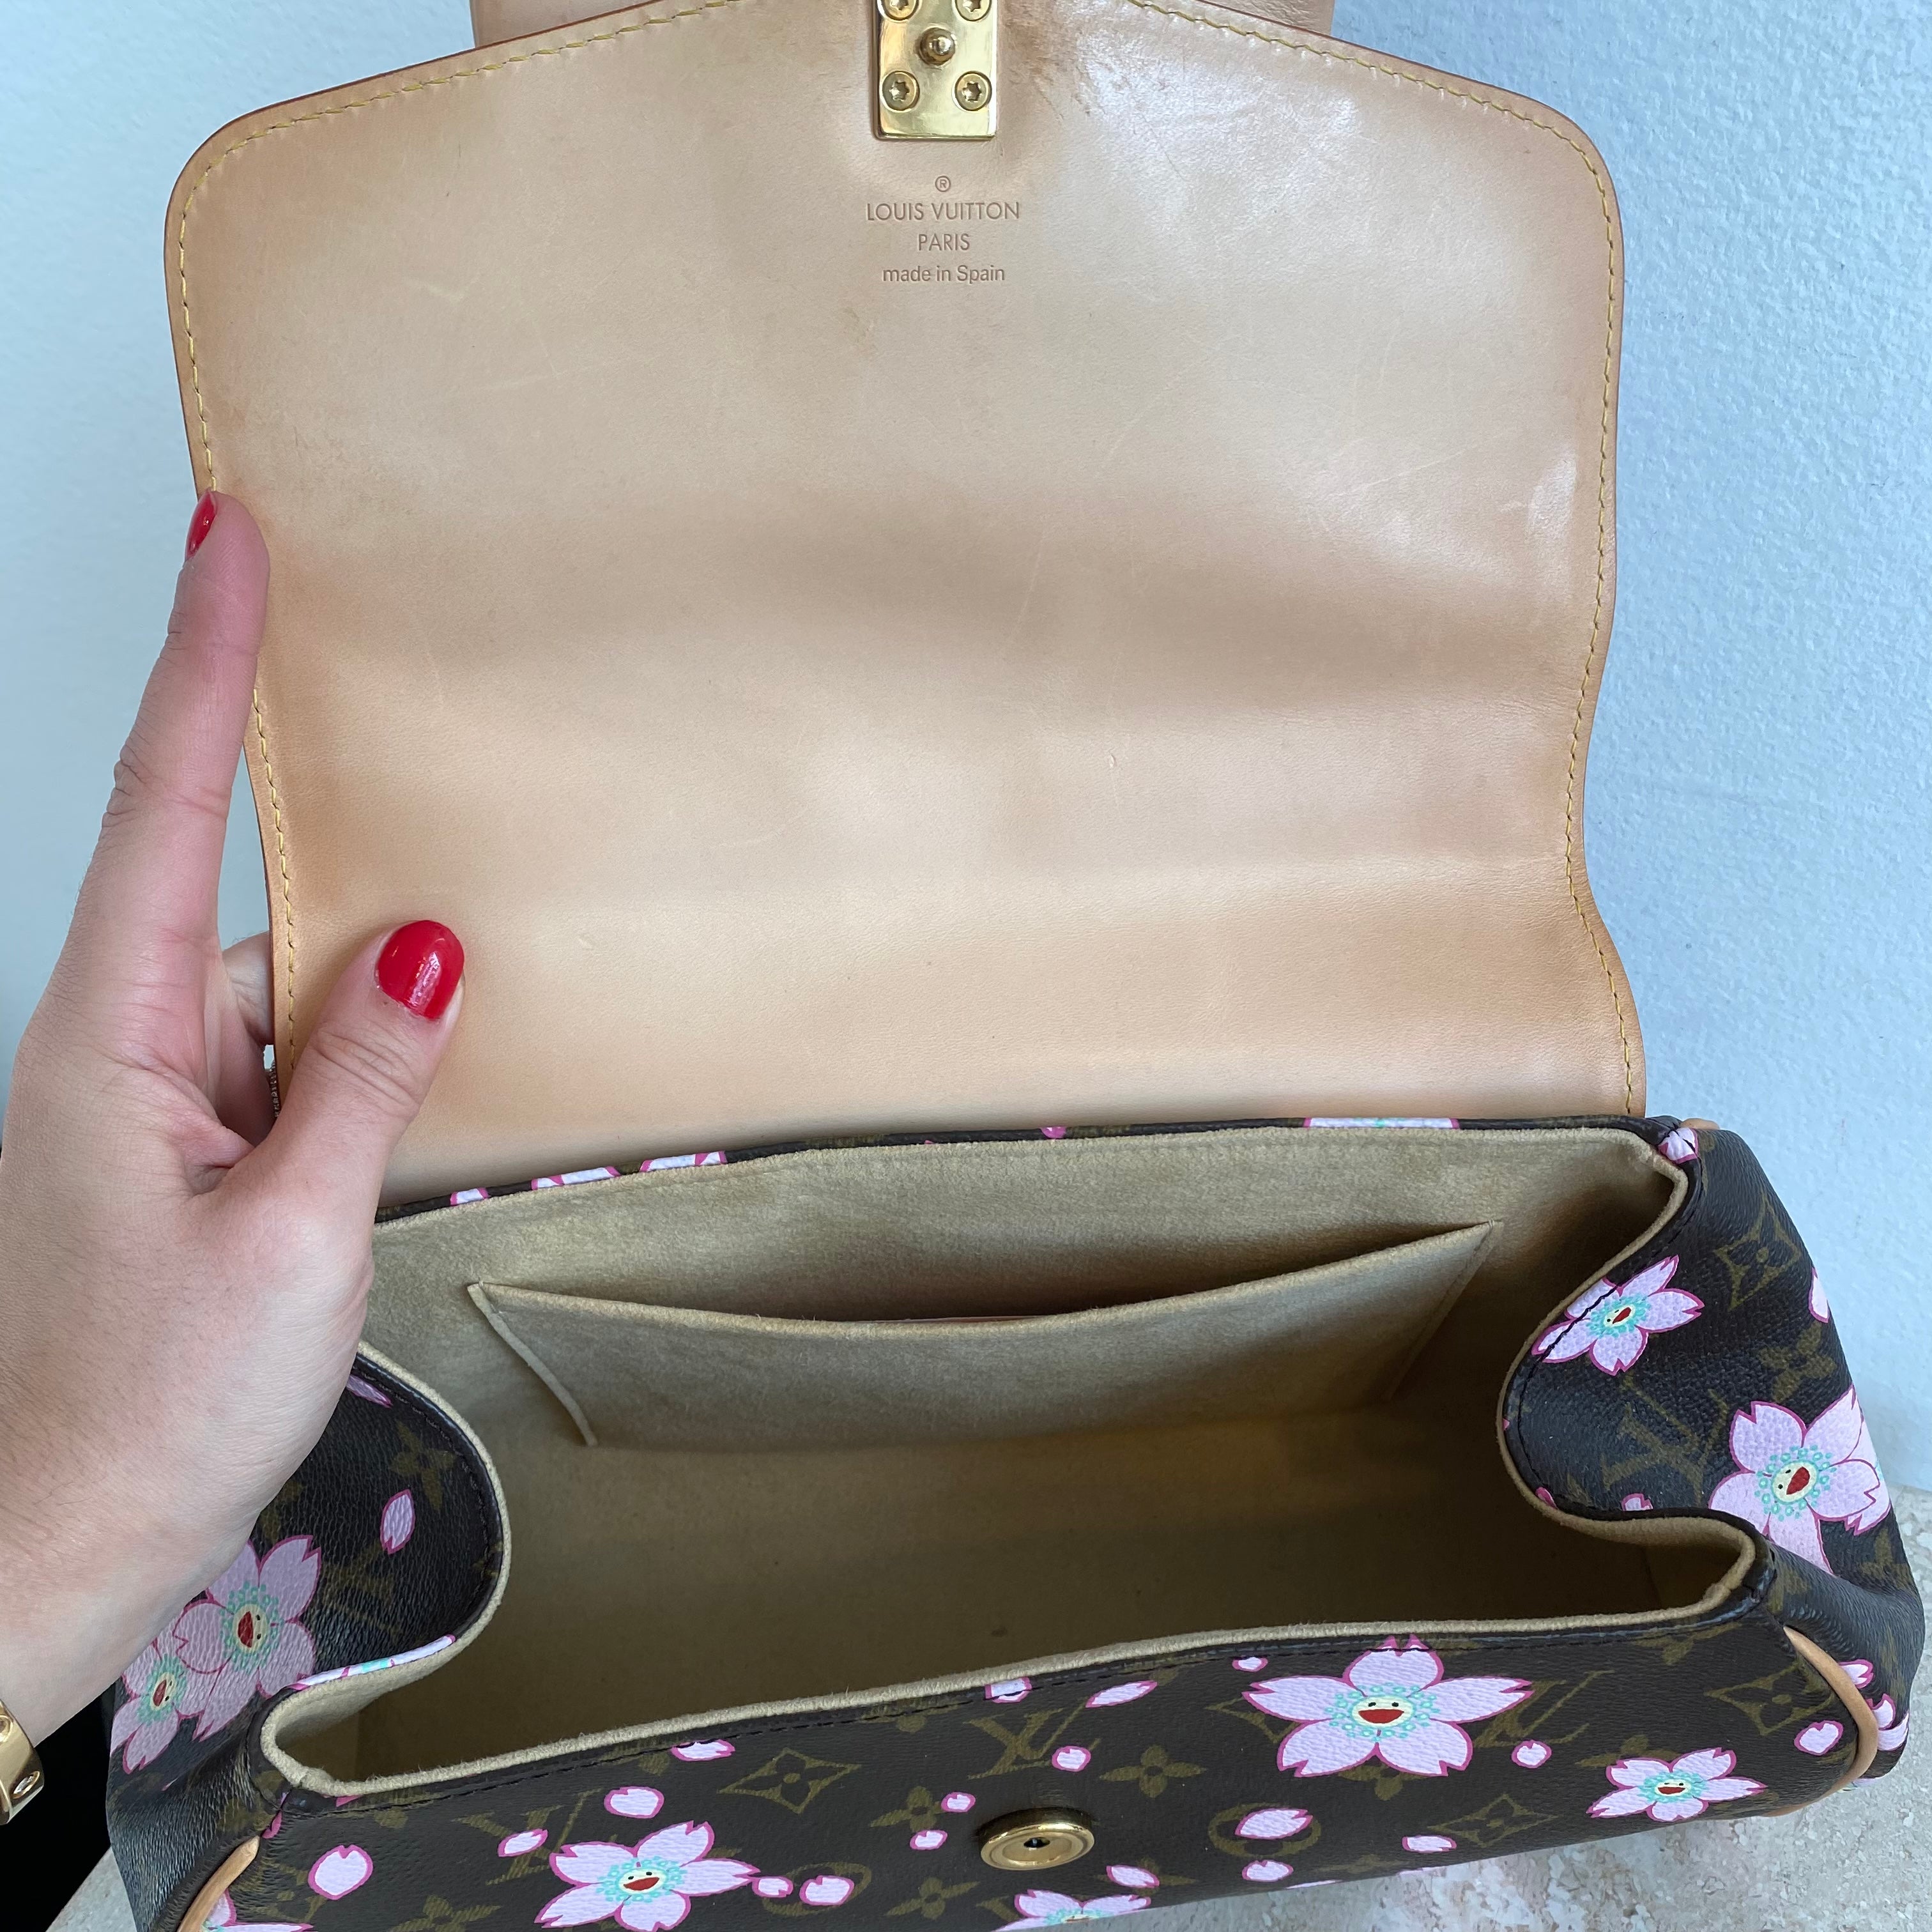 Fireflies Cherry Blossom Artwork by New Vintage Handbags